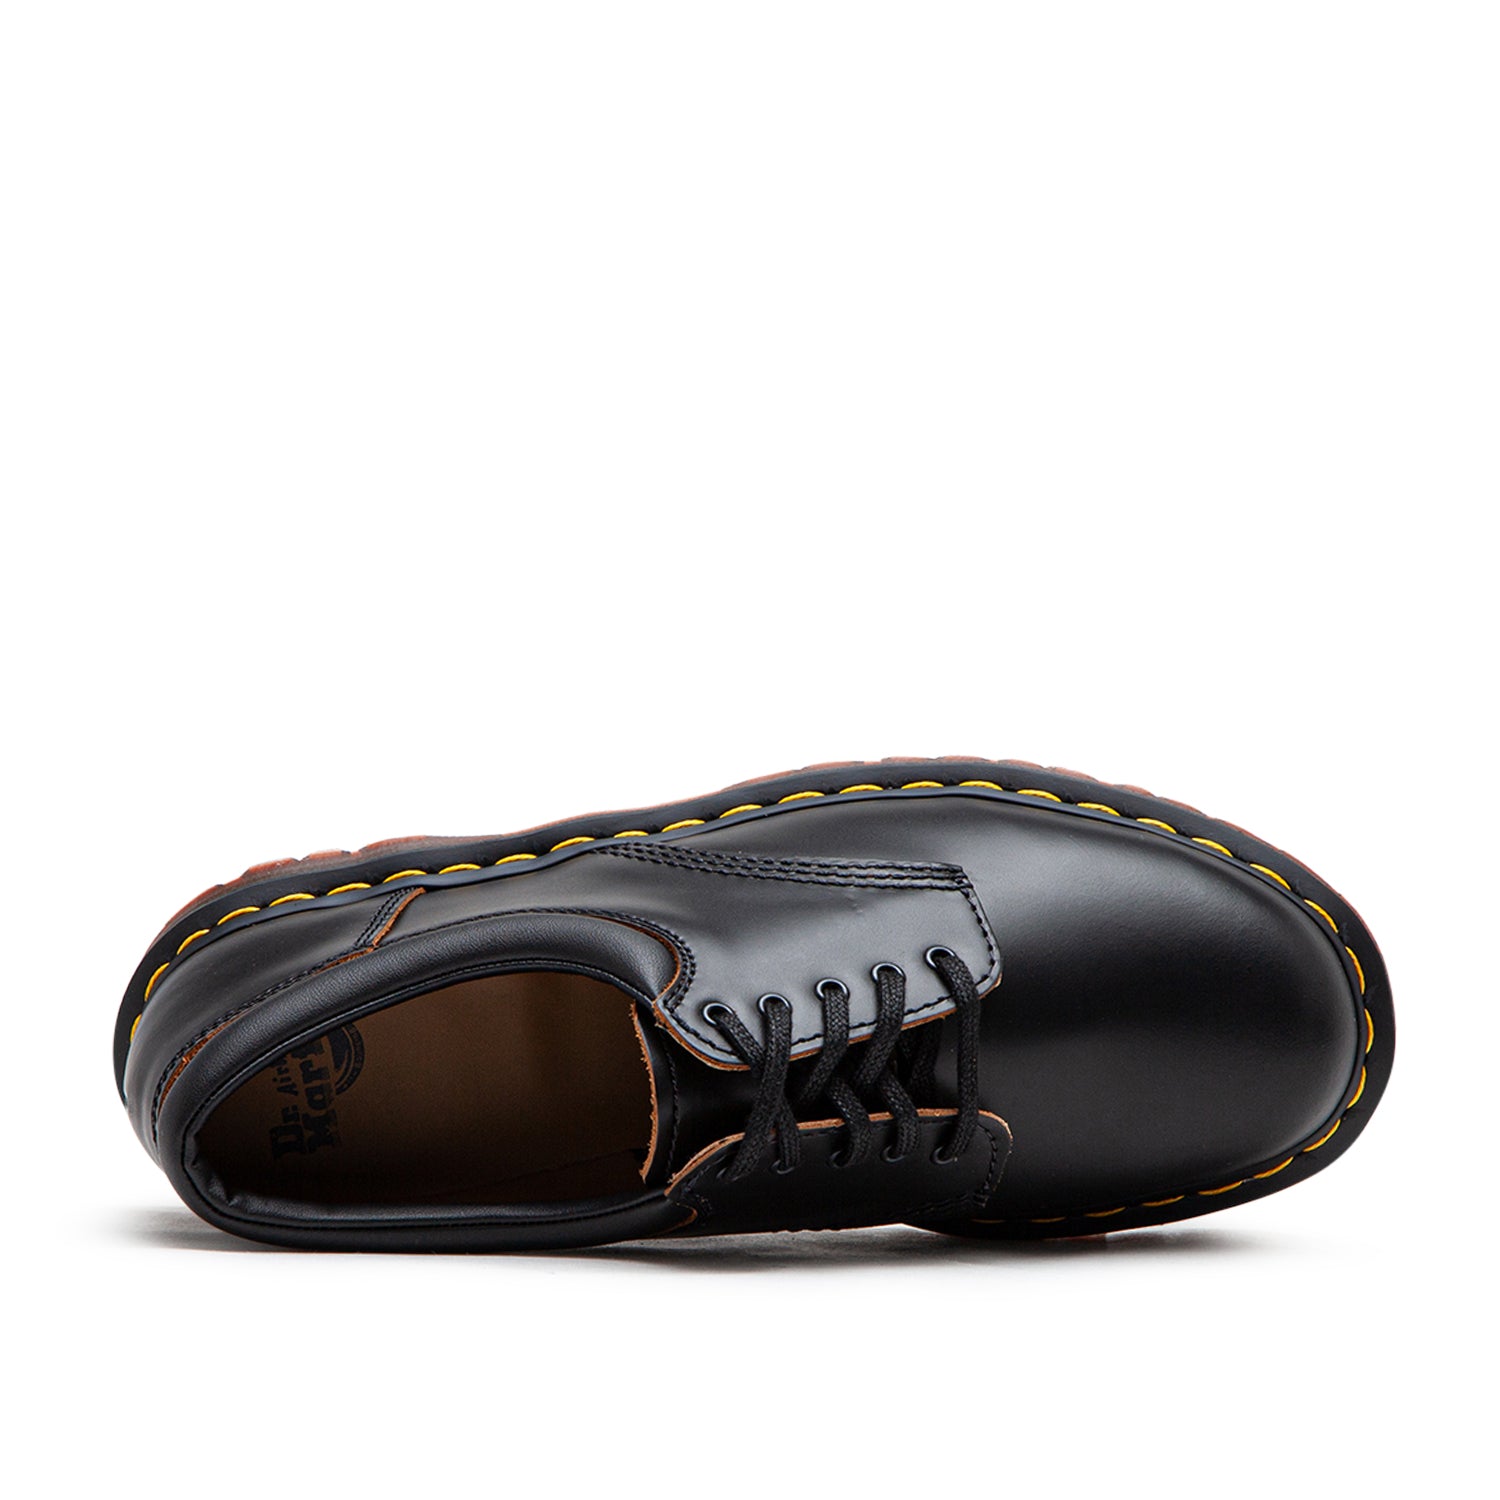 Dr. Martens 8053 Vintage Smooth Leather Oxford Shoes (Schwarz)  - Cheap Juzsports Jordan Outlet